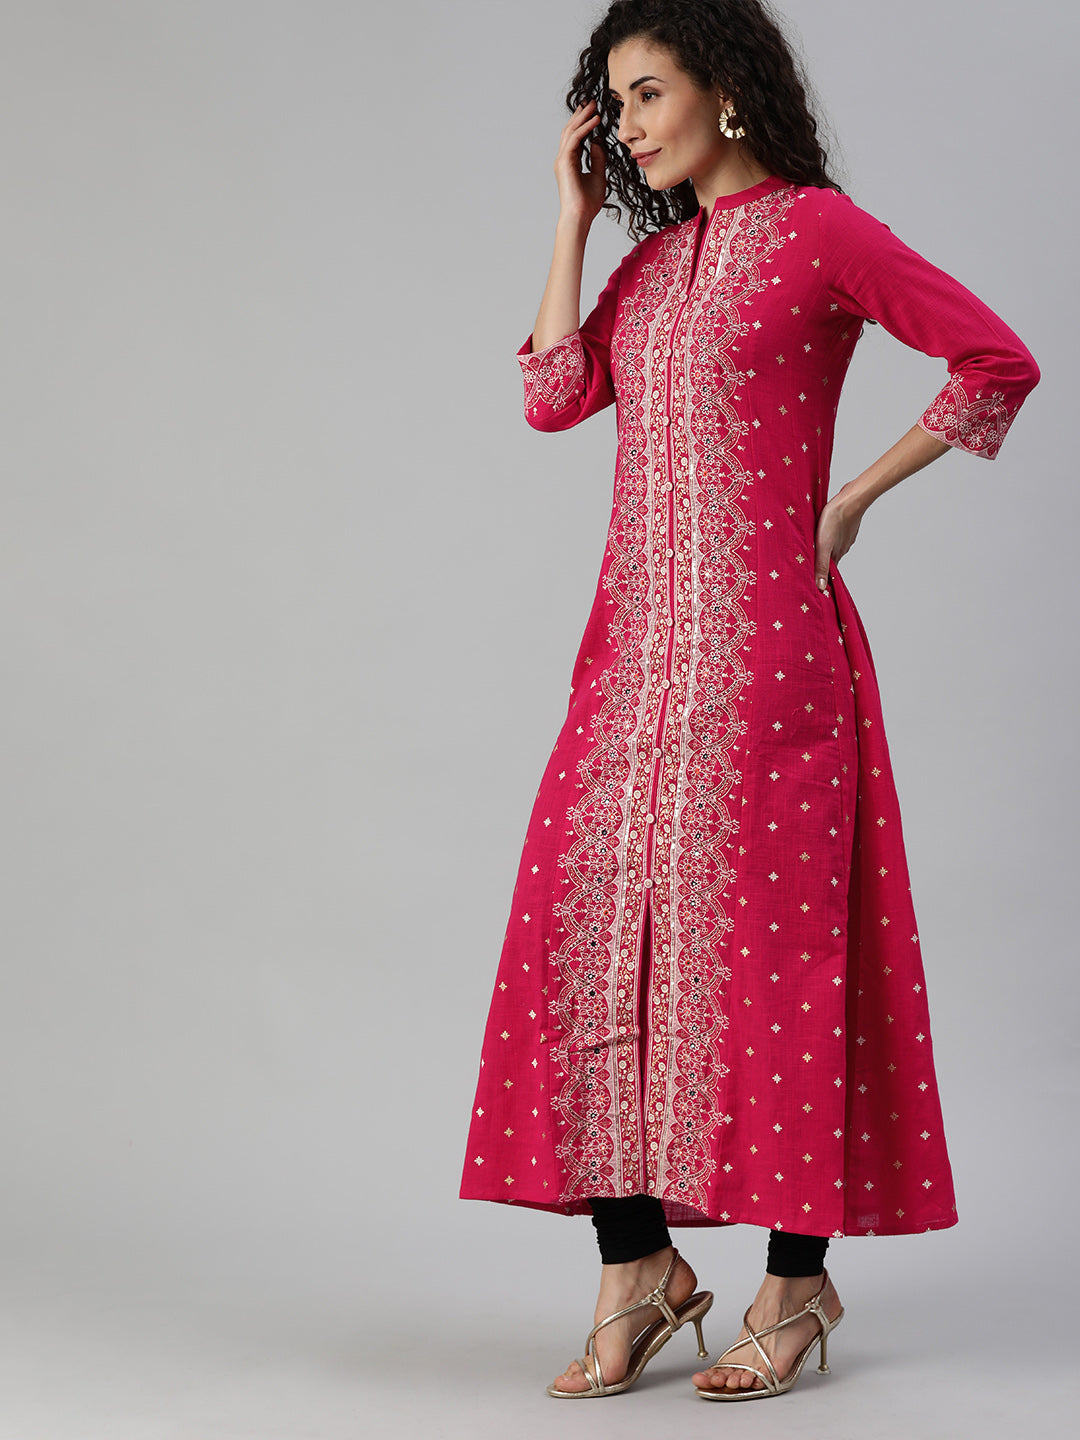 Ishin Women's Cotton Pink Embellished Anarkali Kurta